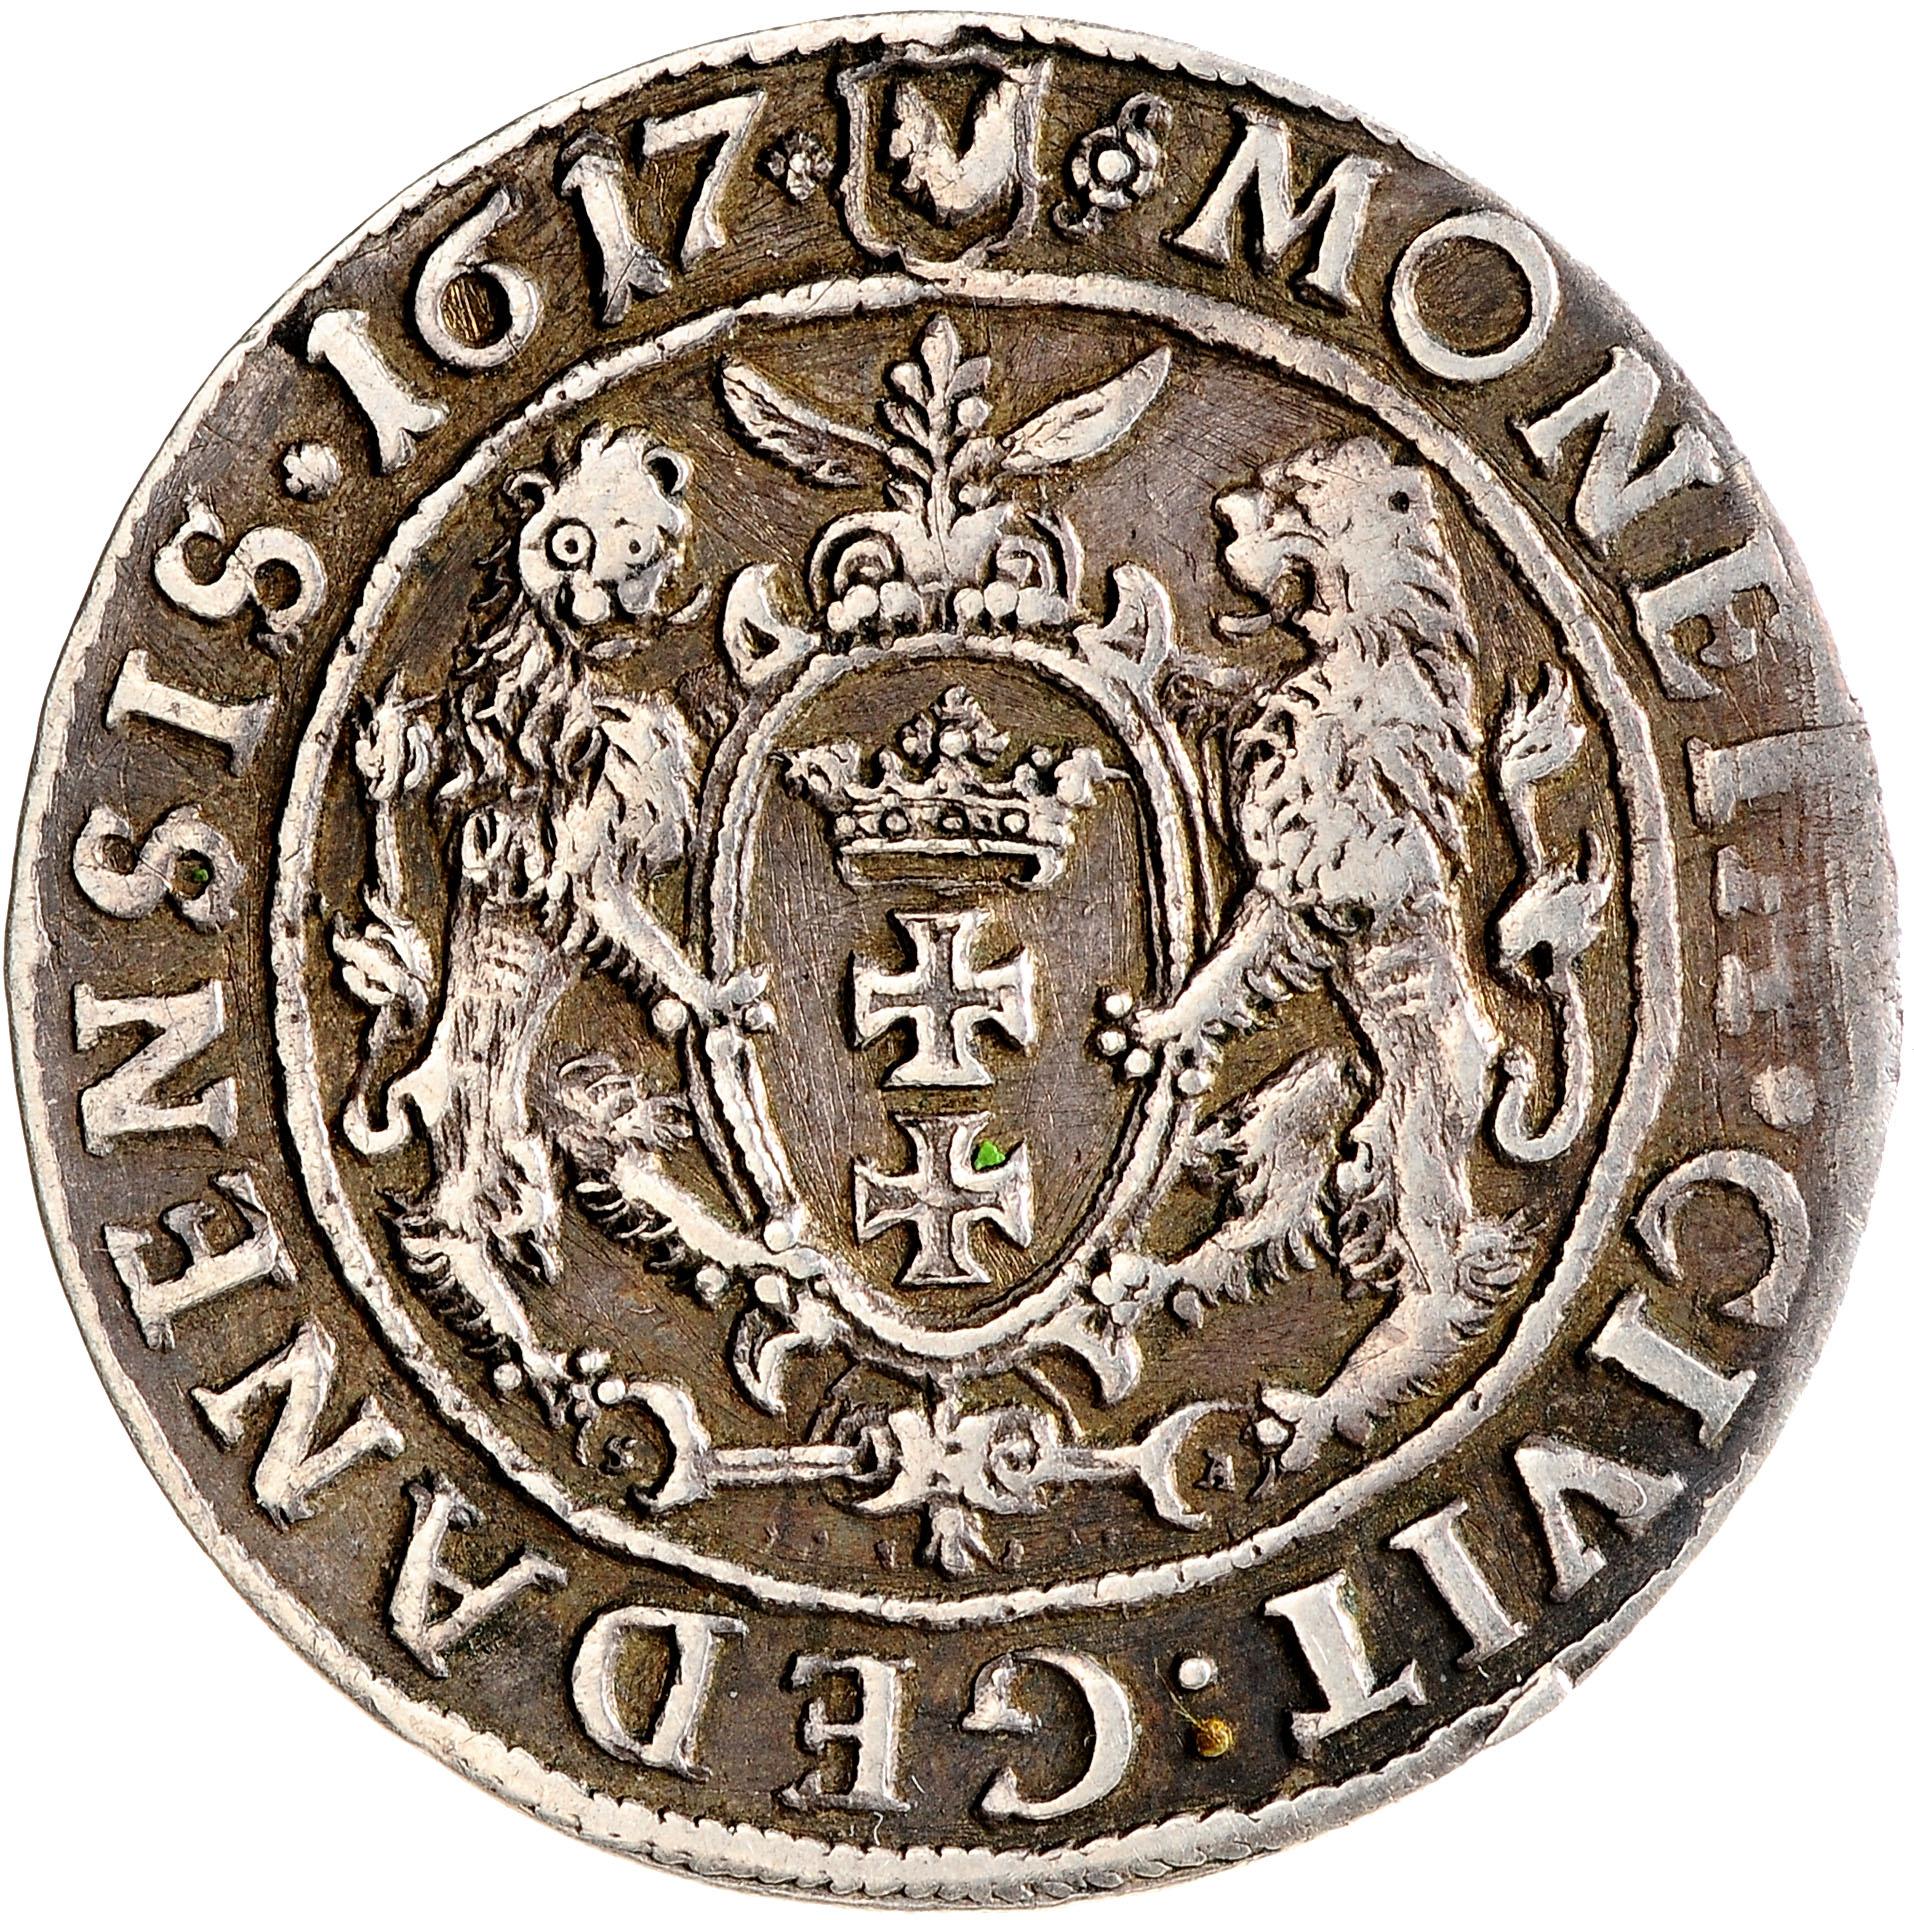 Монета речь посполита. Сигизмунд 3 ОРТ 1616 Данциг. Данциг 1 ОРТ 1617. Талер Сигизмунда. Монеты речи Посполитой 17 века.